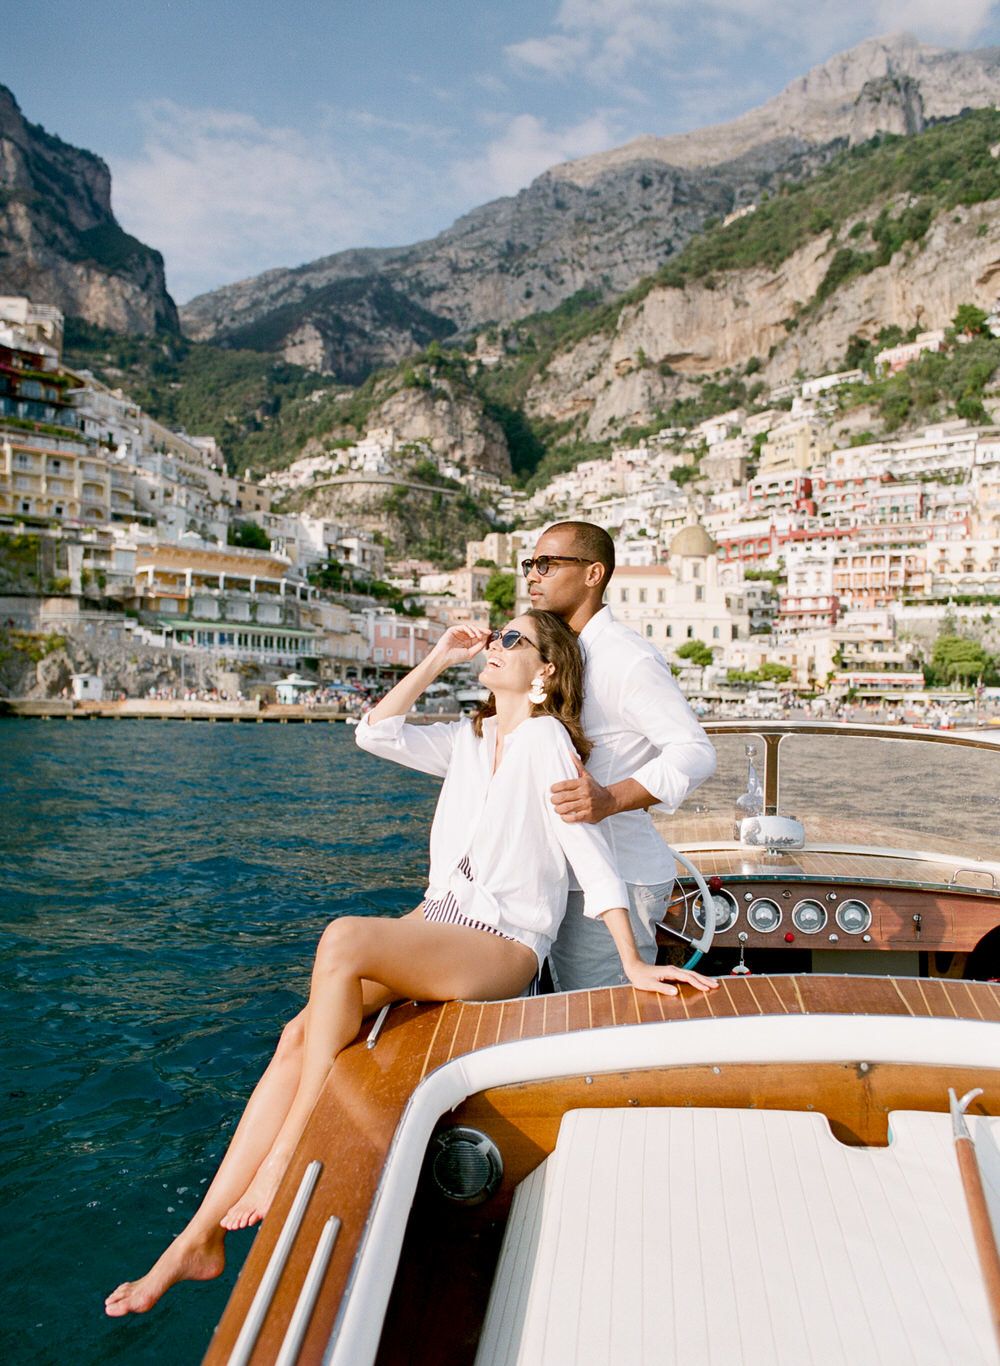 Unforgettable Amalfi Coast Honeymoon - Creating Memories In Italy's Coastal Paradise